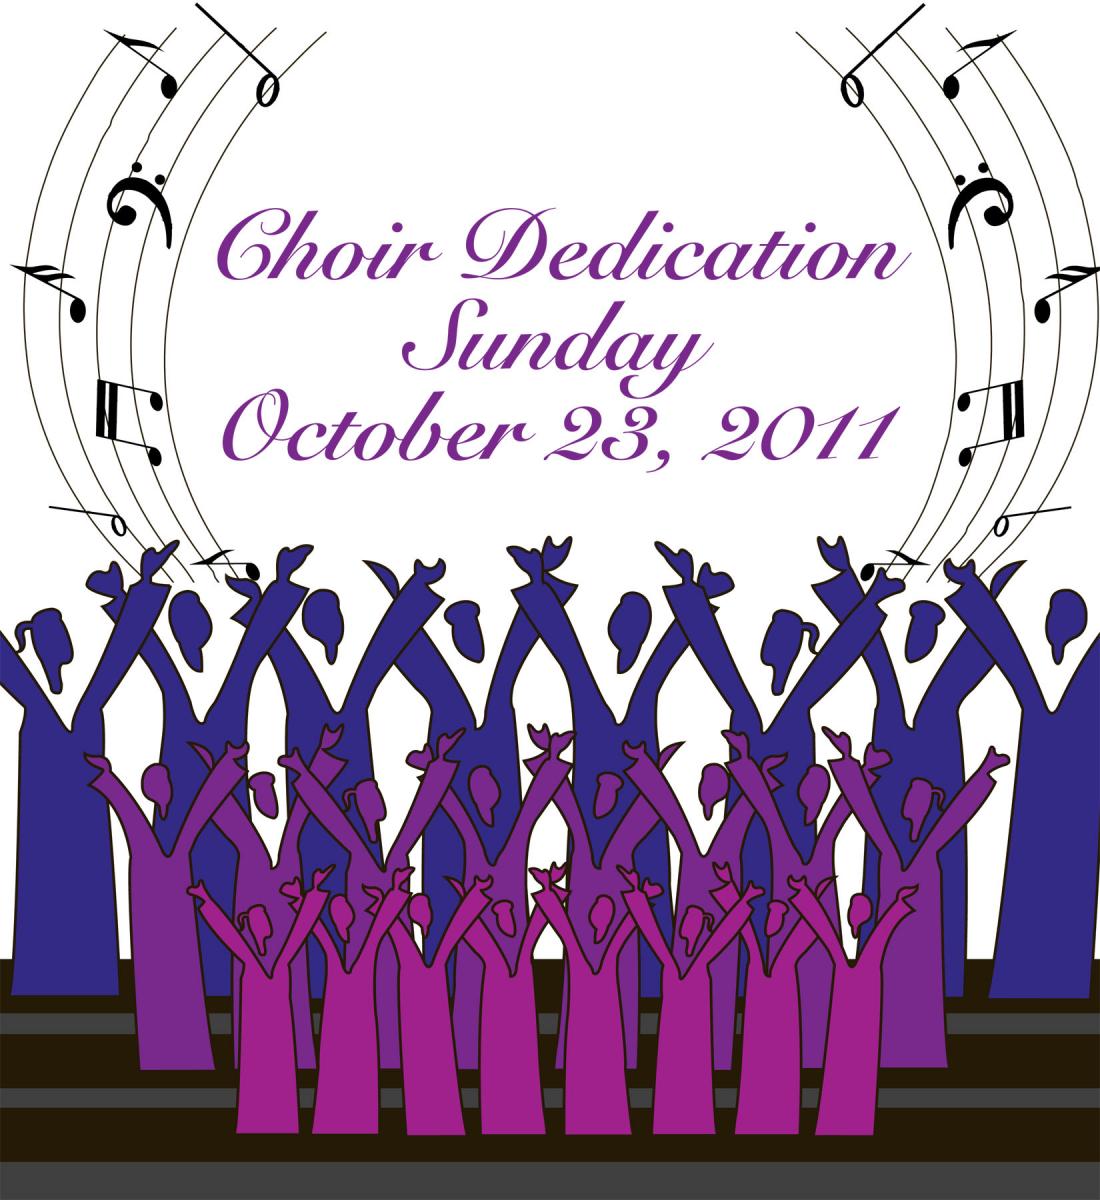 Choir clip art pictures free clipart images image